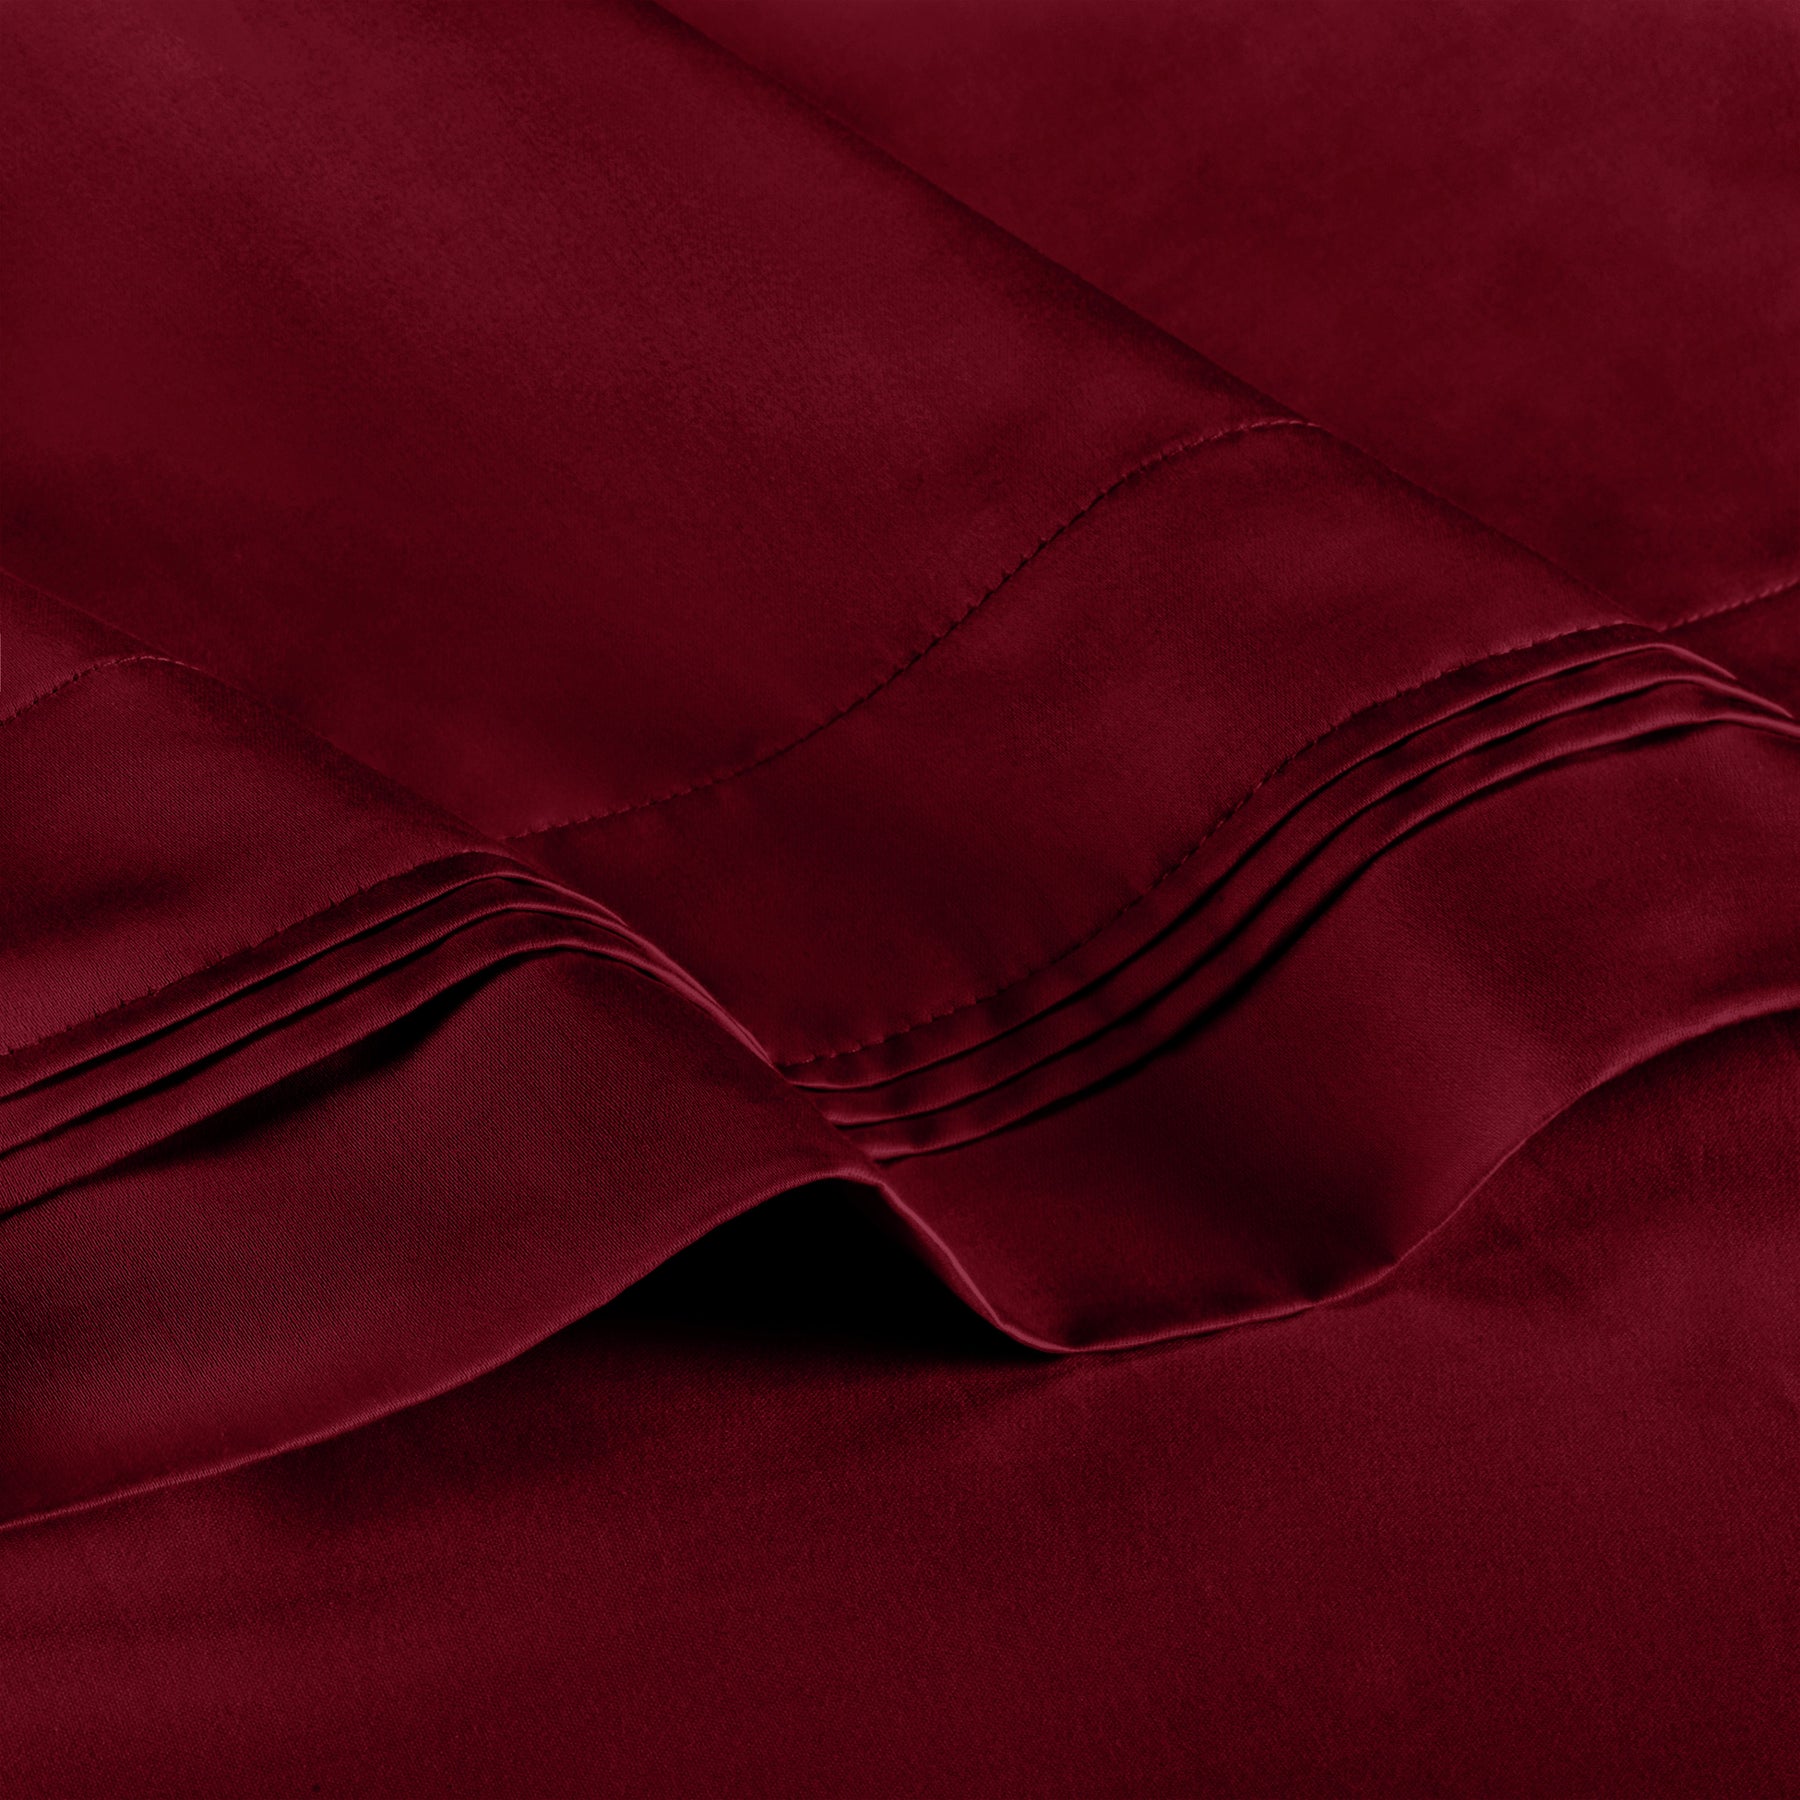 Premium 650 Thread Count Egyptian Cotton Solid Pillowcase Set - Burgundy